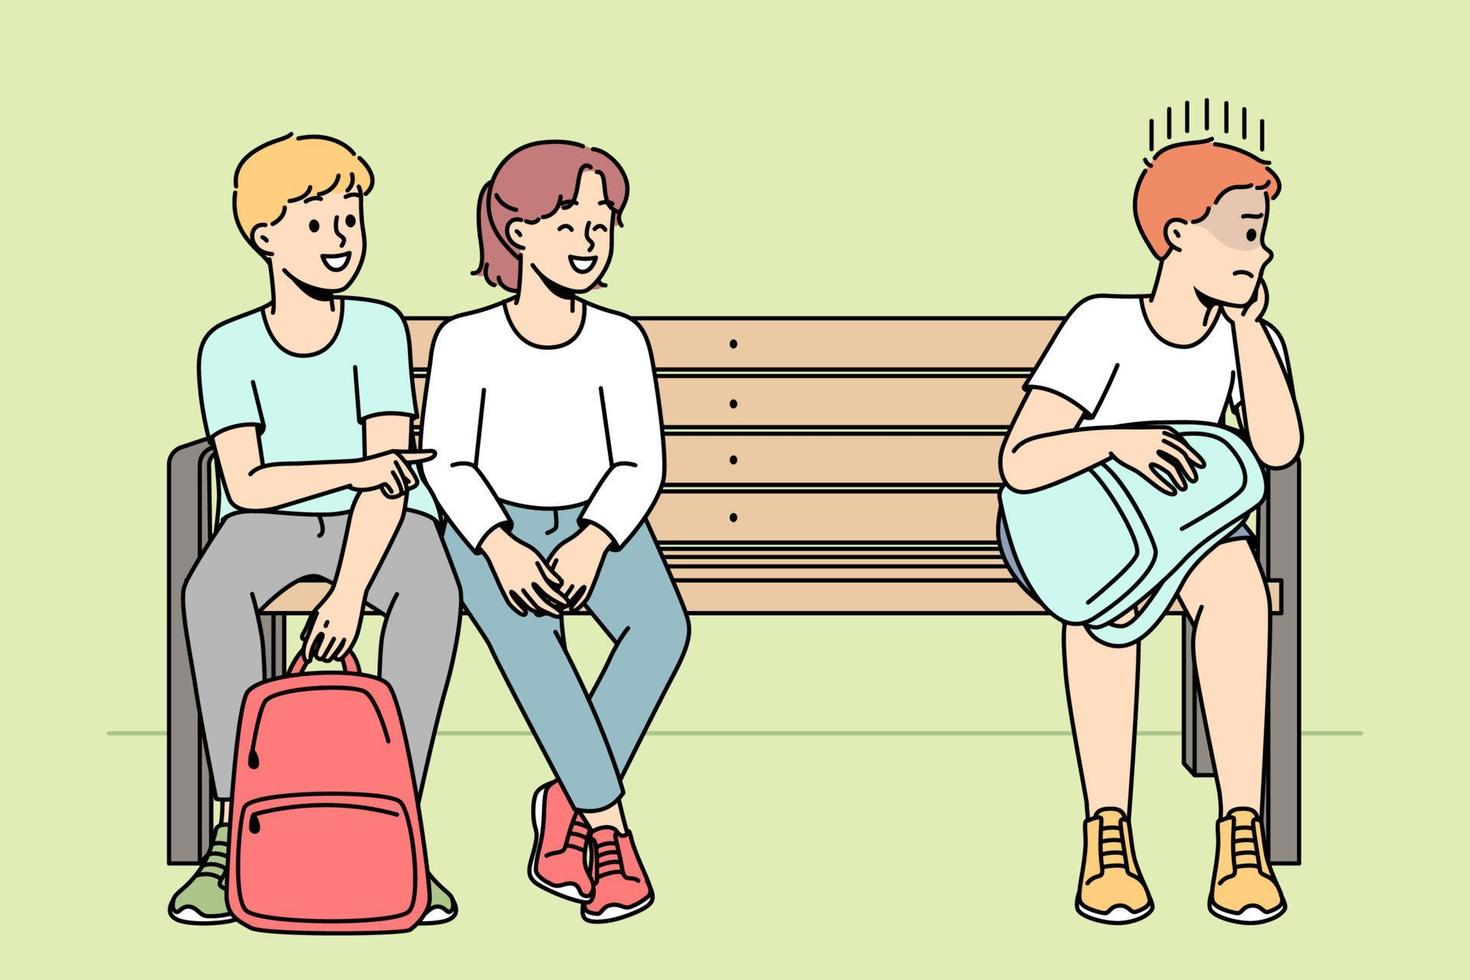 Rude children make fun of lonely boy kid. Schoolchildren bullying child sitting separate on bench. School mockery and discrimination. Vector illustration.